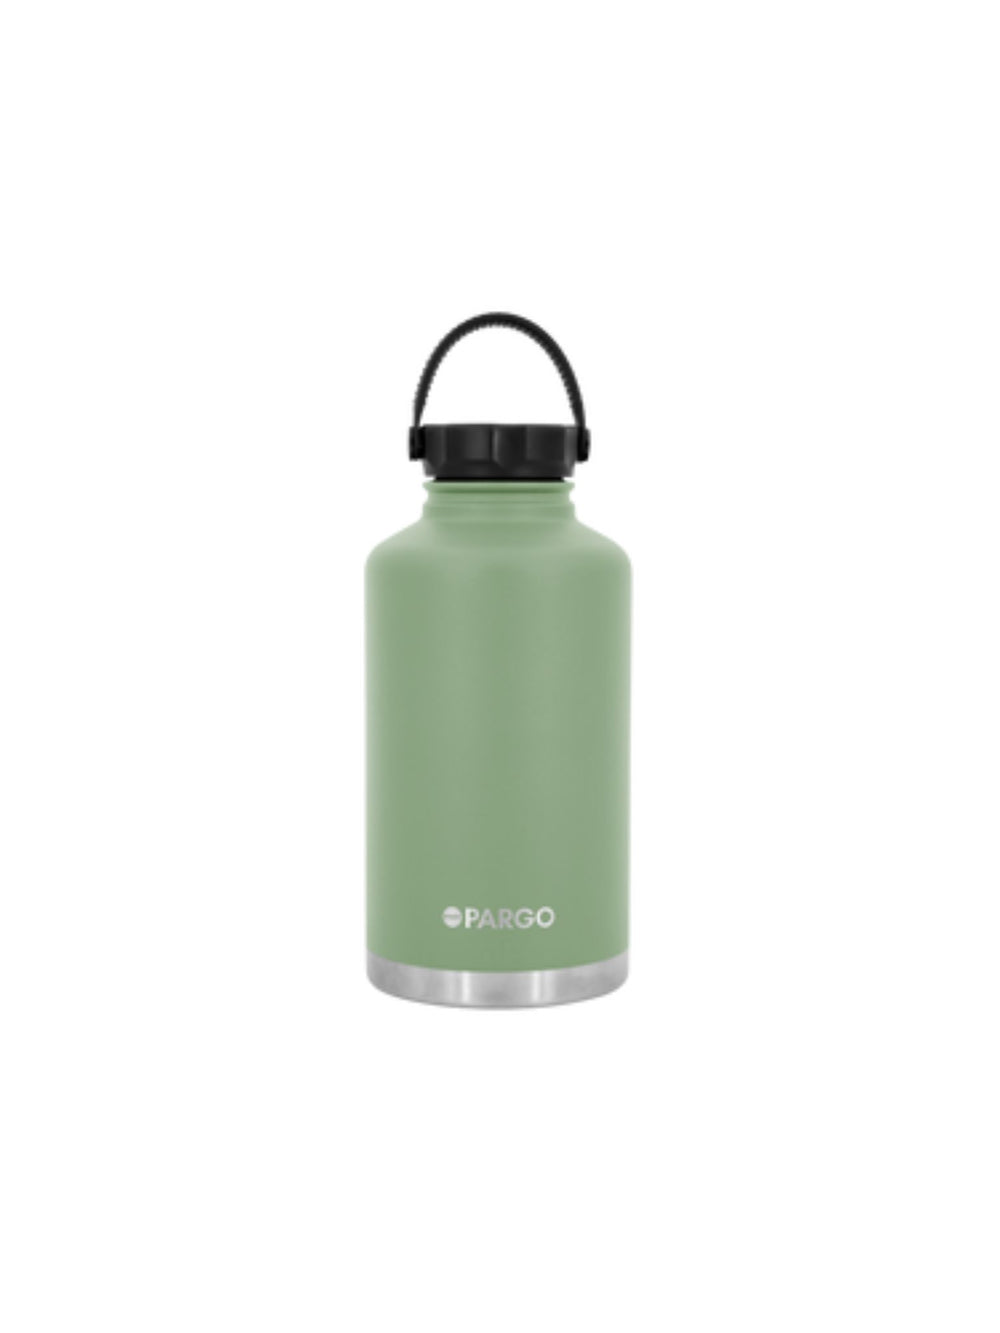 Eucalyptus Green Insulated Bottle Pargo 1890ml